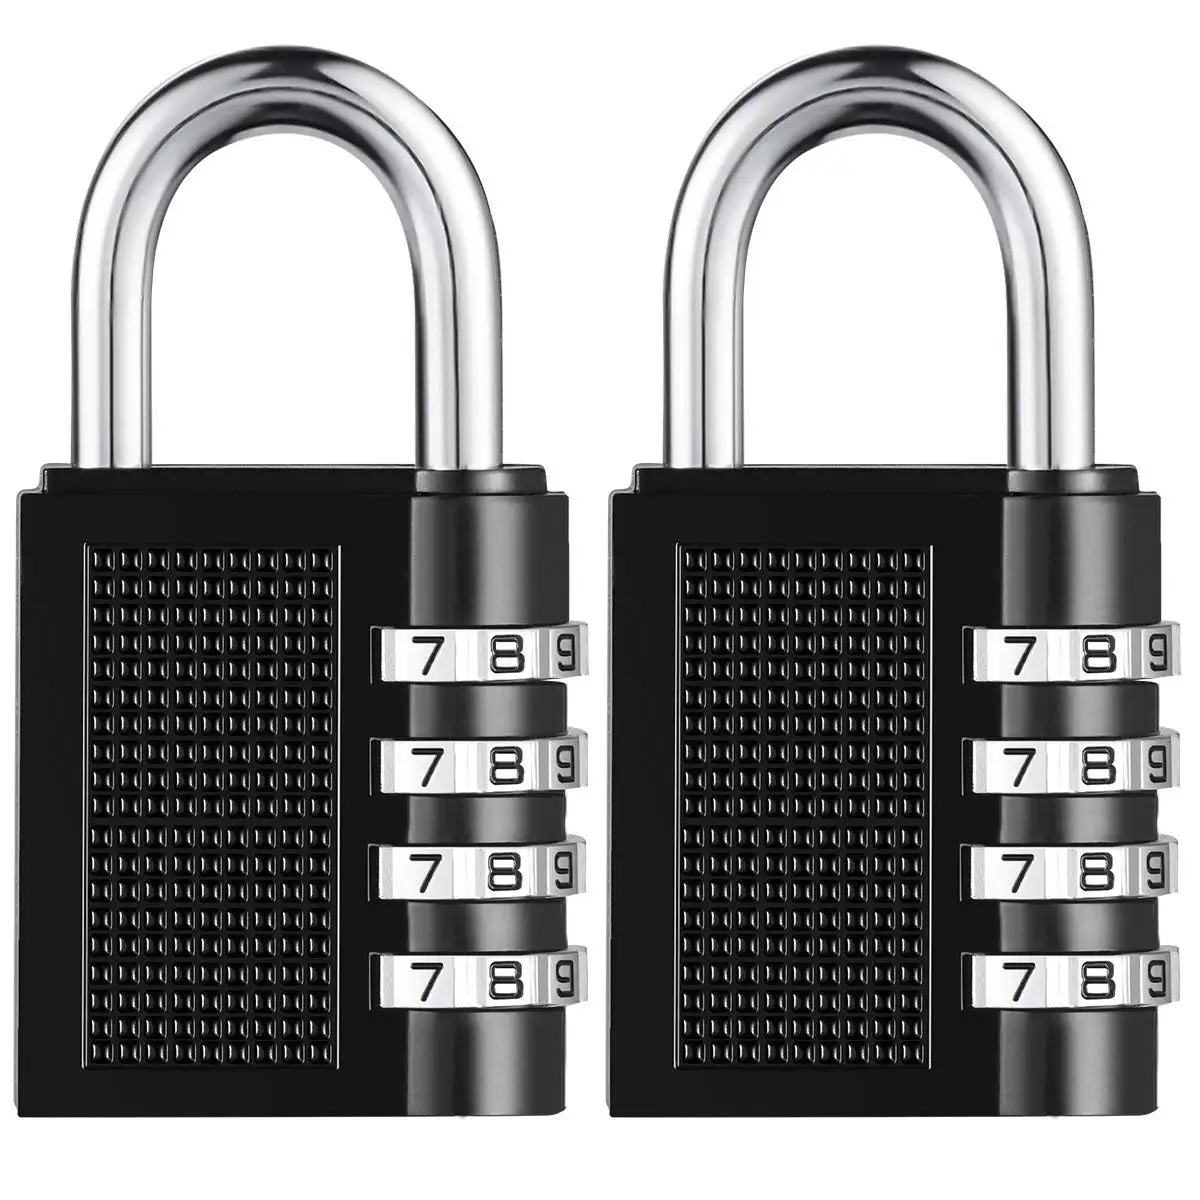 Schwarz 4 Ziffer blätter Rücksetzbare Kombination Passworts chloss Safe Door Locker Pad Lock Vorhänge schloss Reisegepäck Koffer Gym Lock